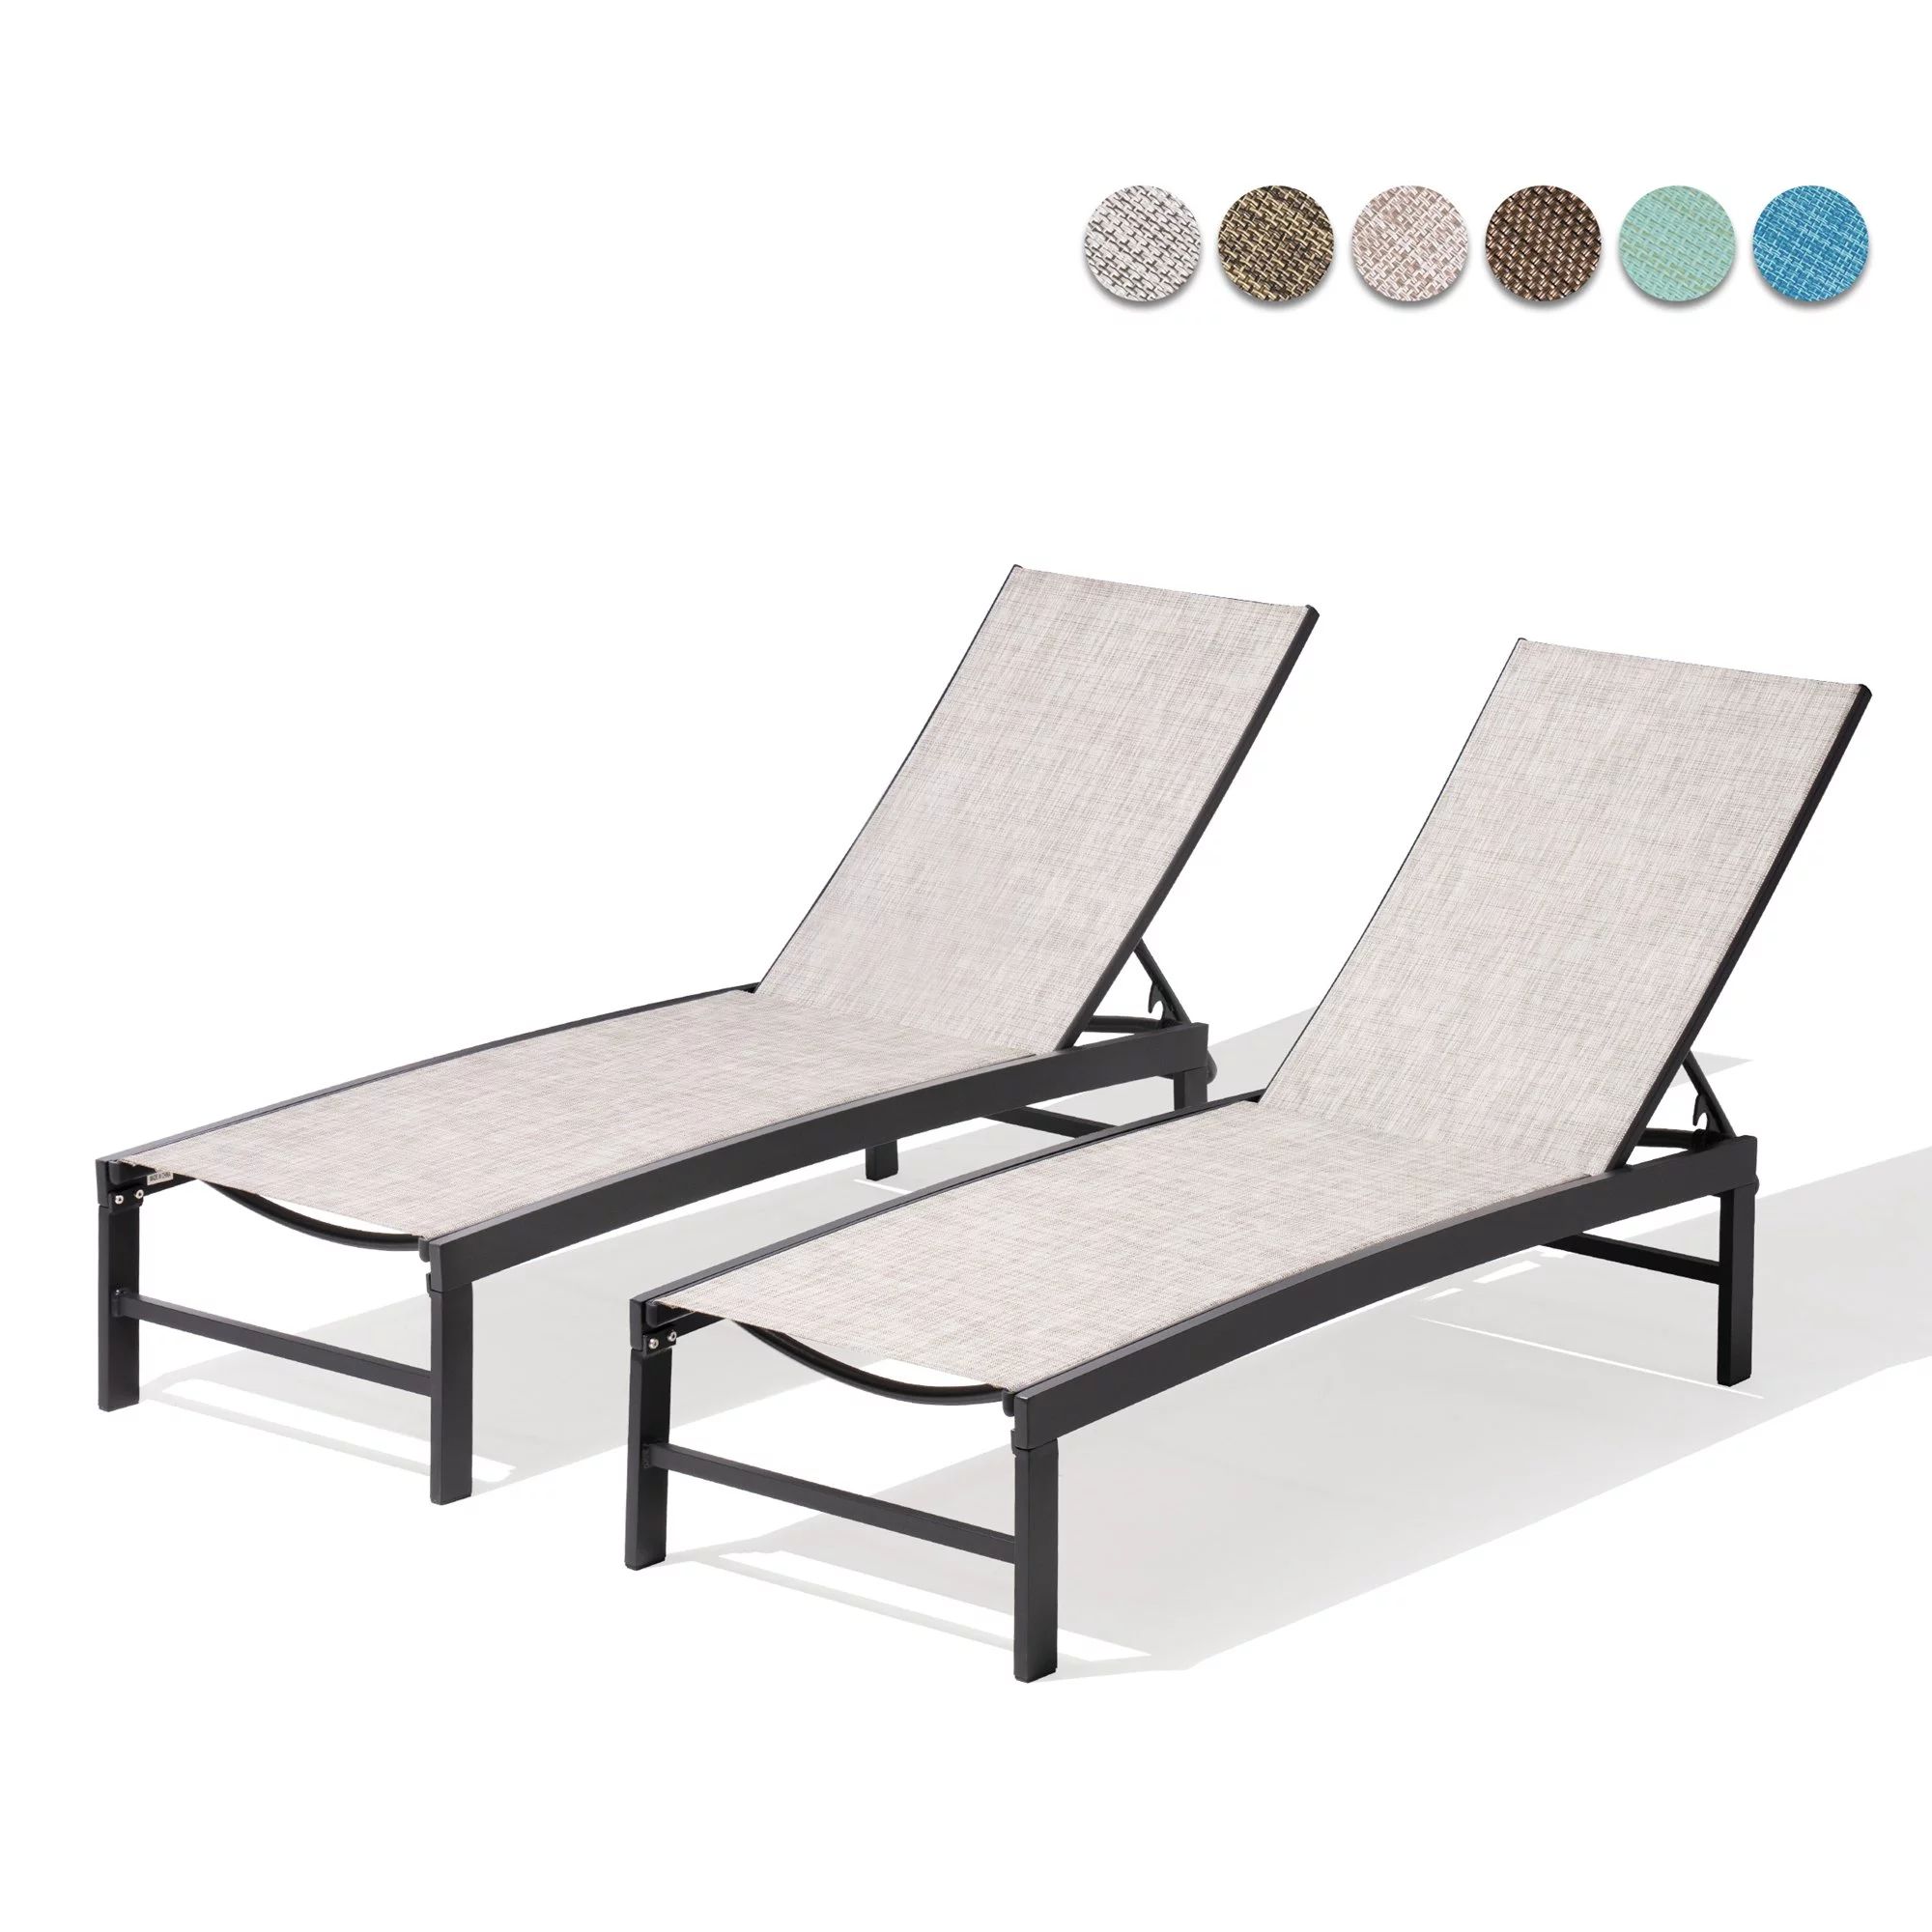 Pellebant  Adjustable Aluminum Patio Chaise Lounge Chairs Outdoor (Set of 2) Earth Fabric, Dark G... | Walmart (US)